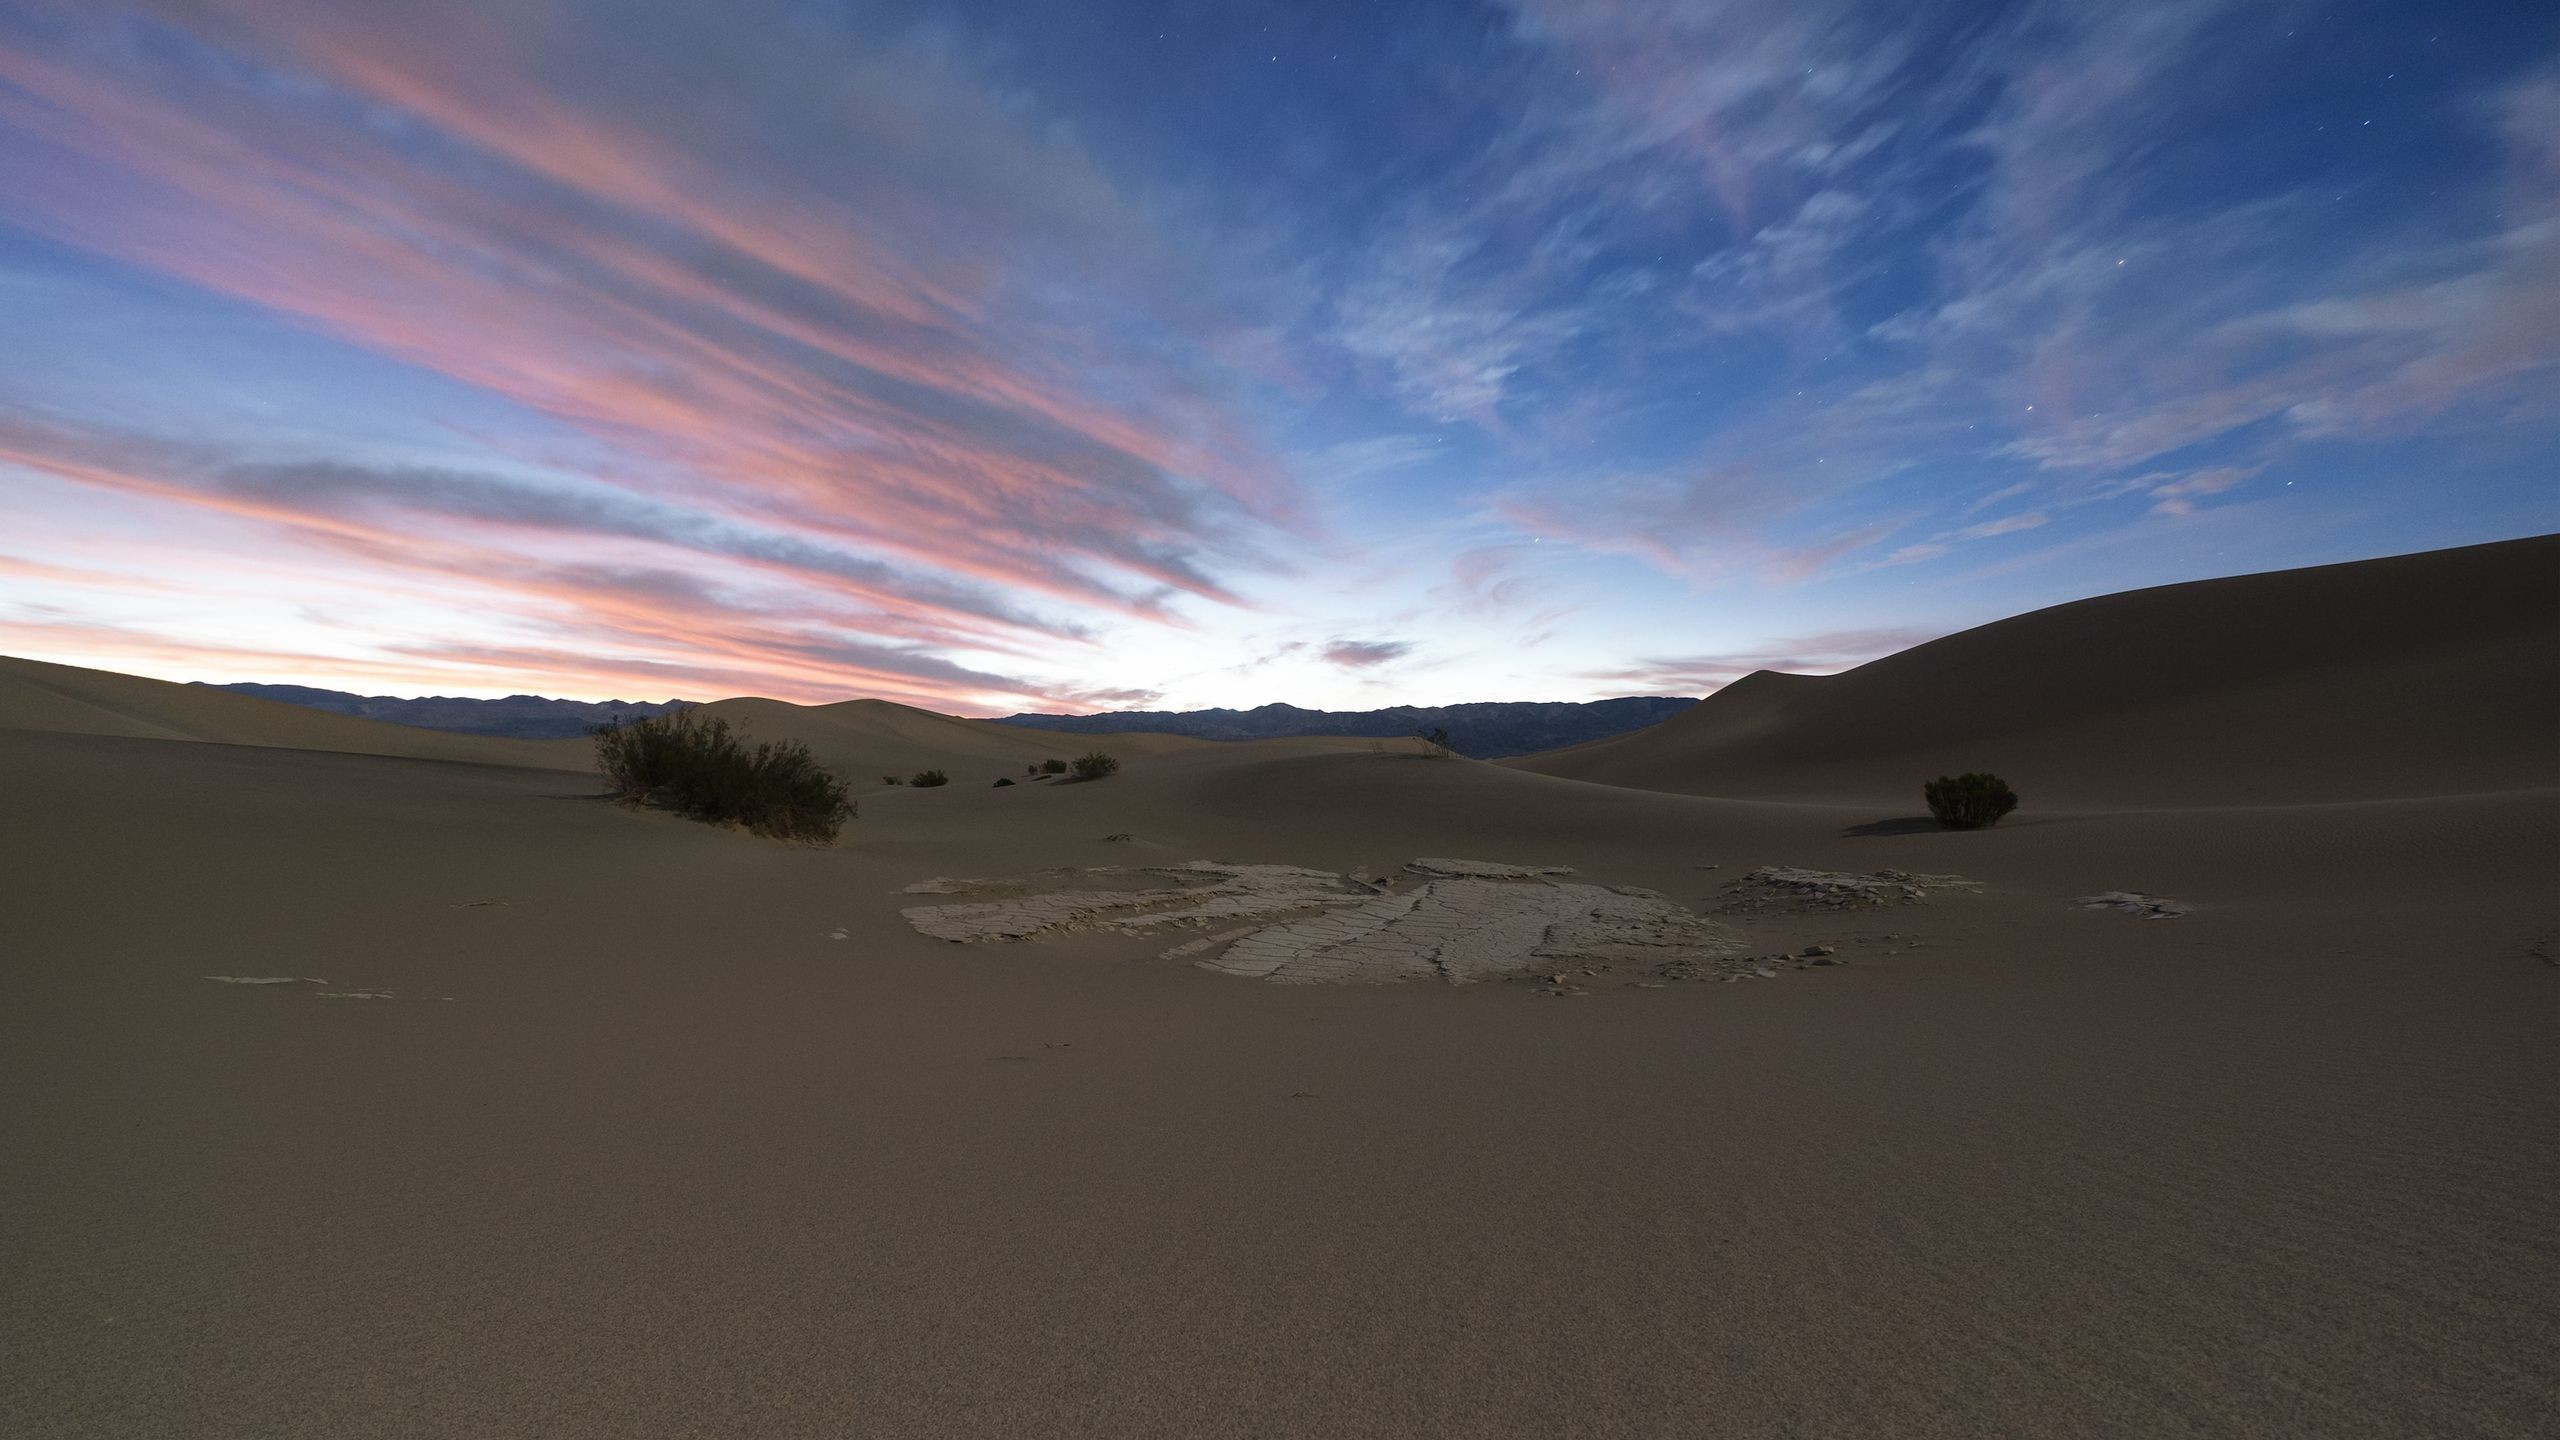 General 2560x1440 nature landscape clouds sand dunes desert sunset plants evening stars long exposure